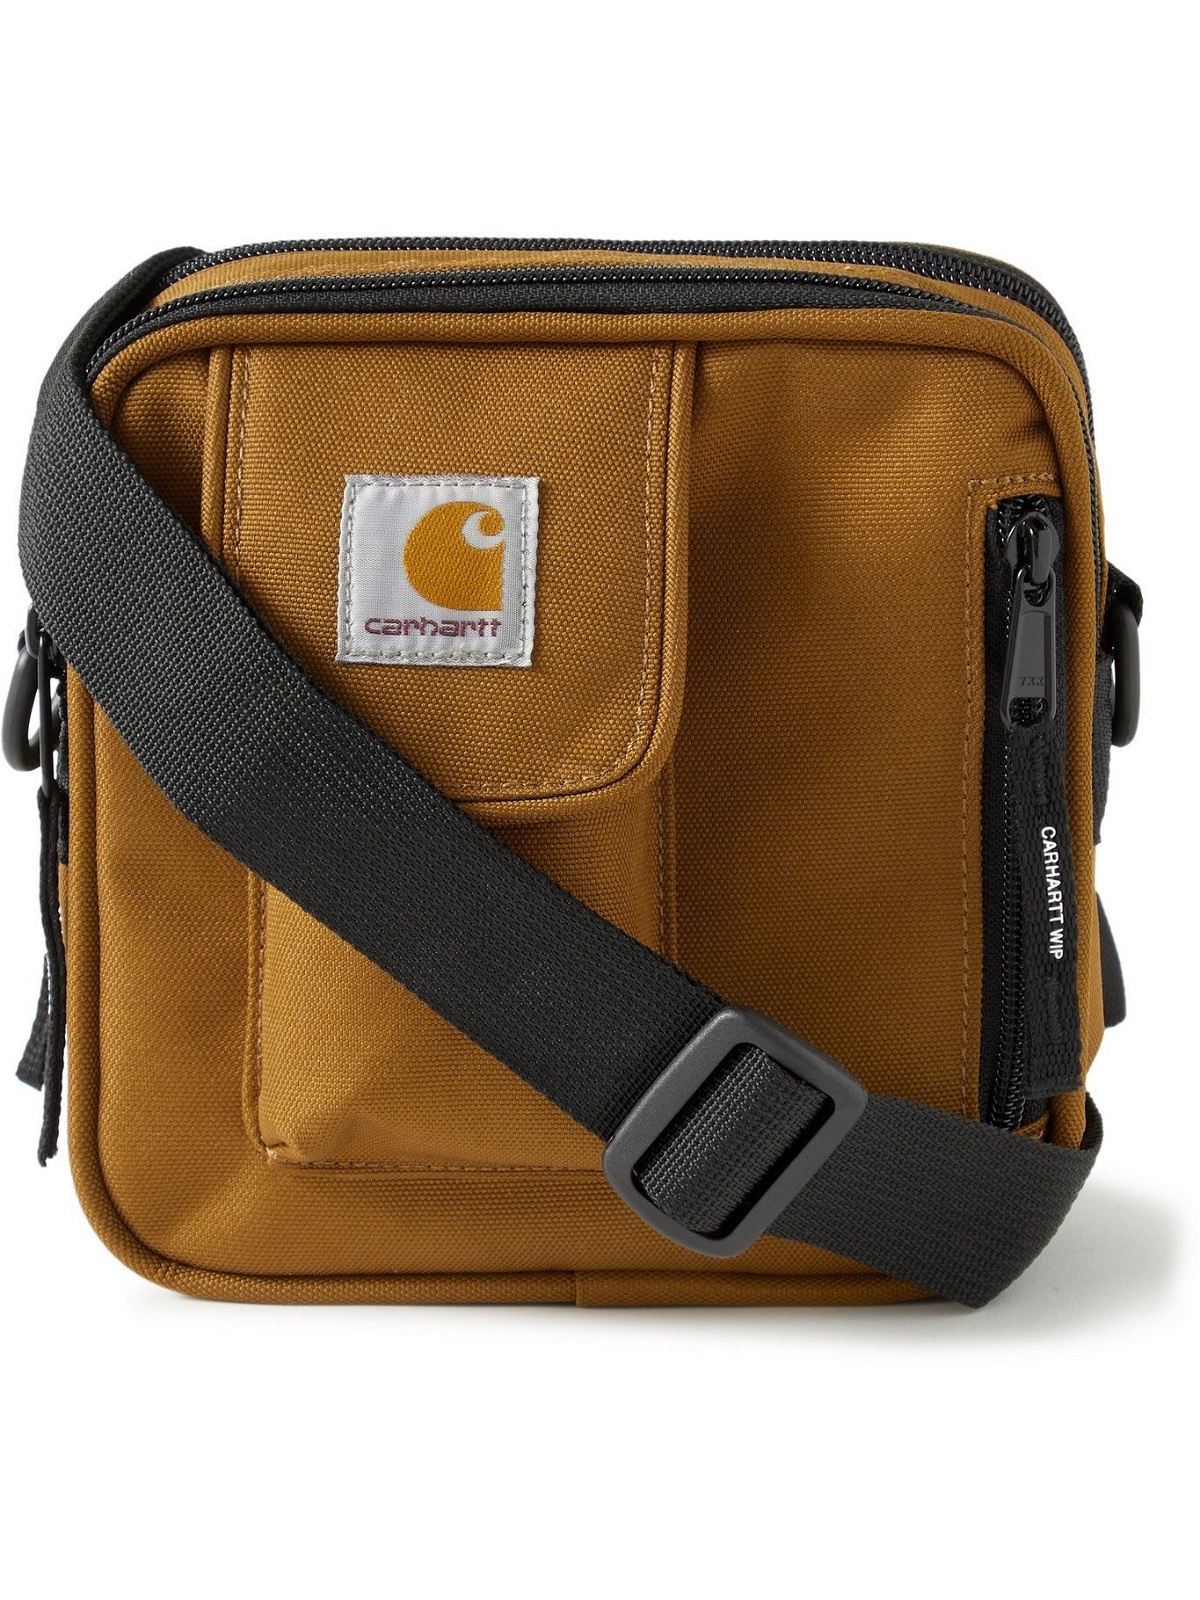 Carhartt WIP Messenger bags for Men